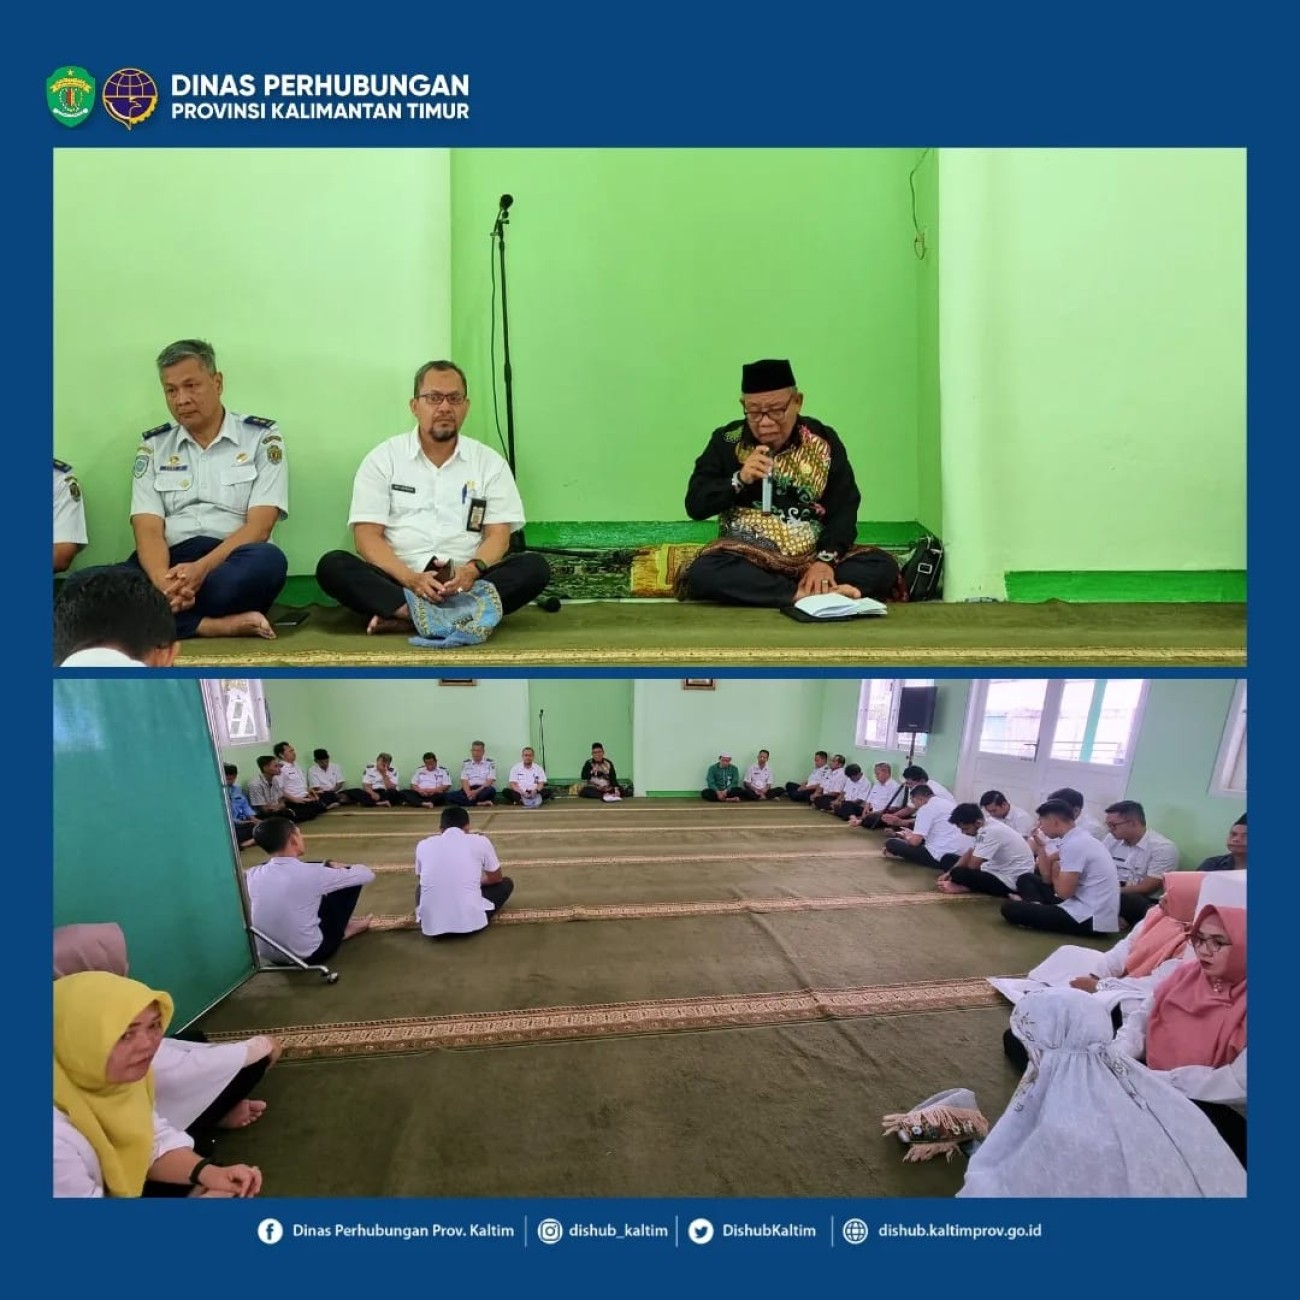 Kegiatan Ceramah Agama pada Bulan Suci Ramadhan 1444 H di Dinas Perhubungan Provinsi Kalimantan Timur